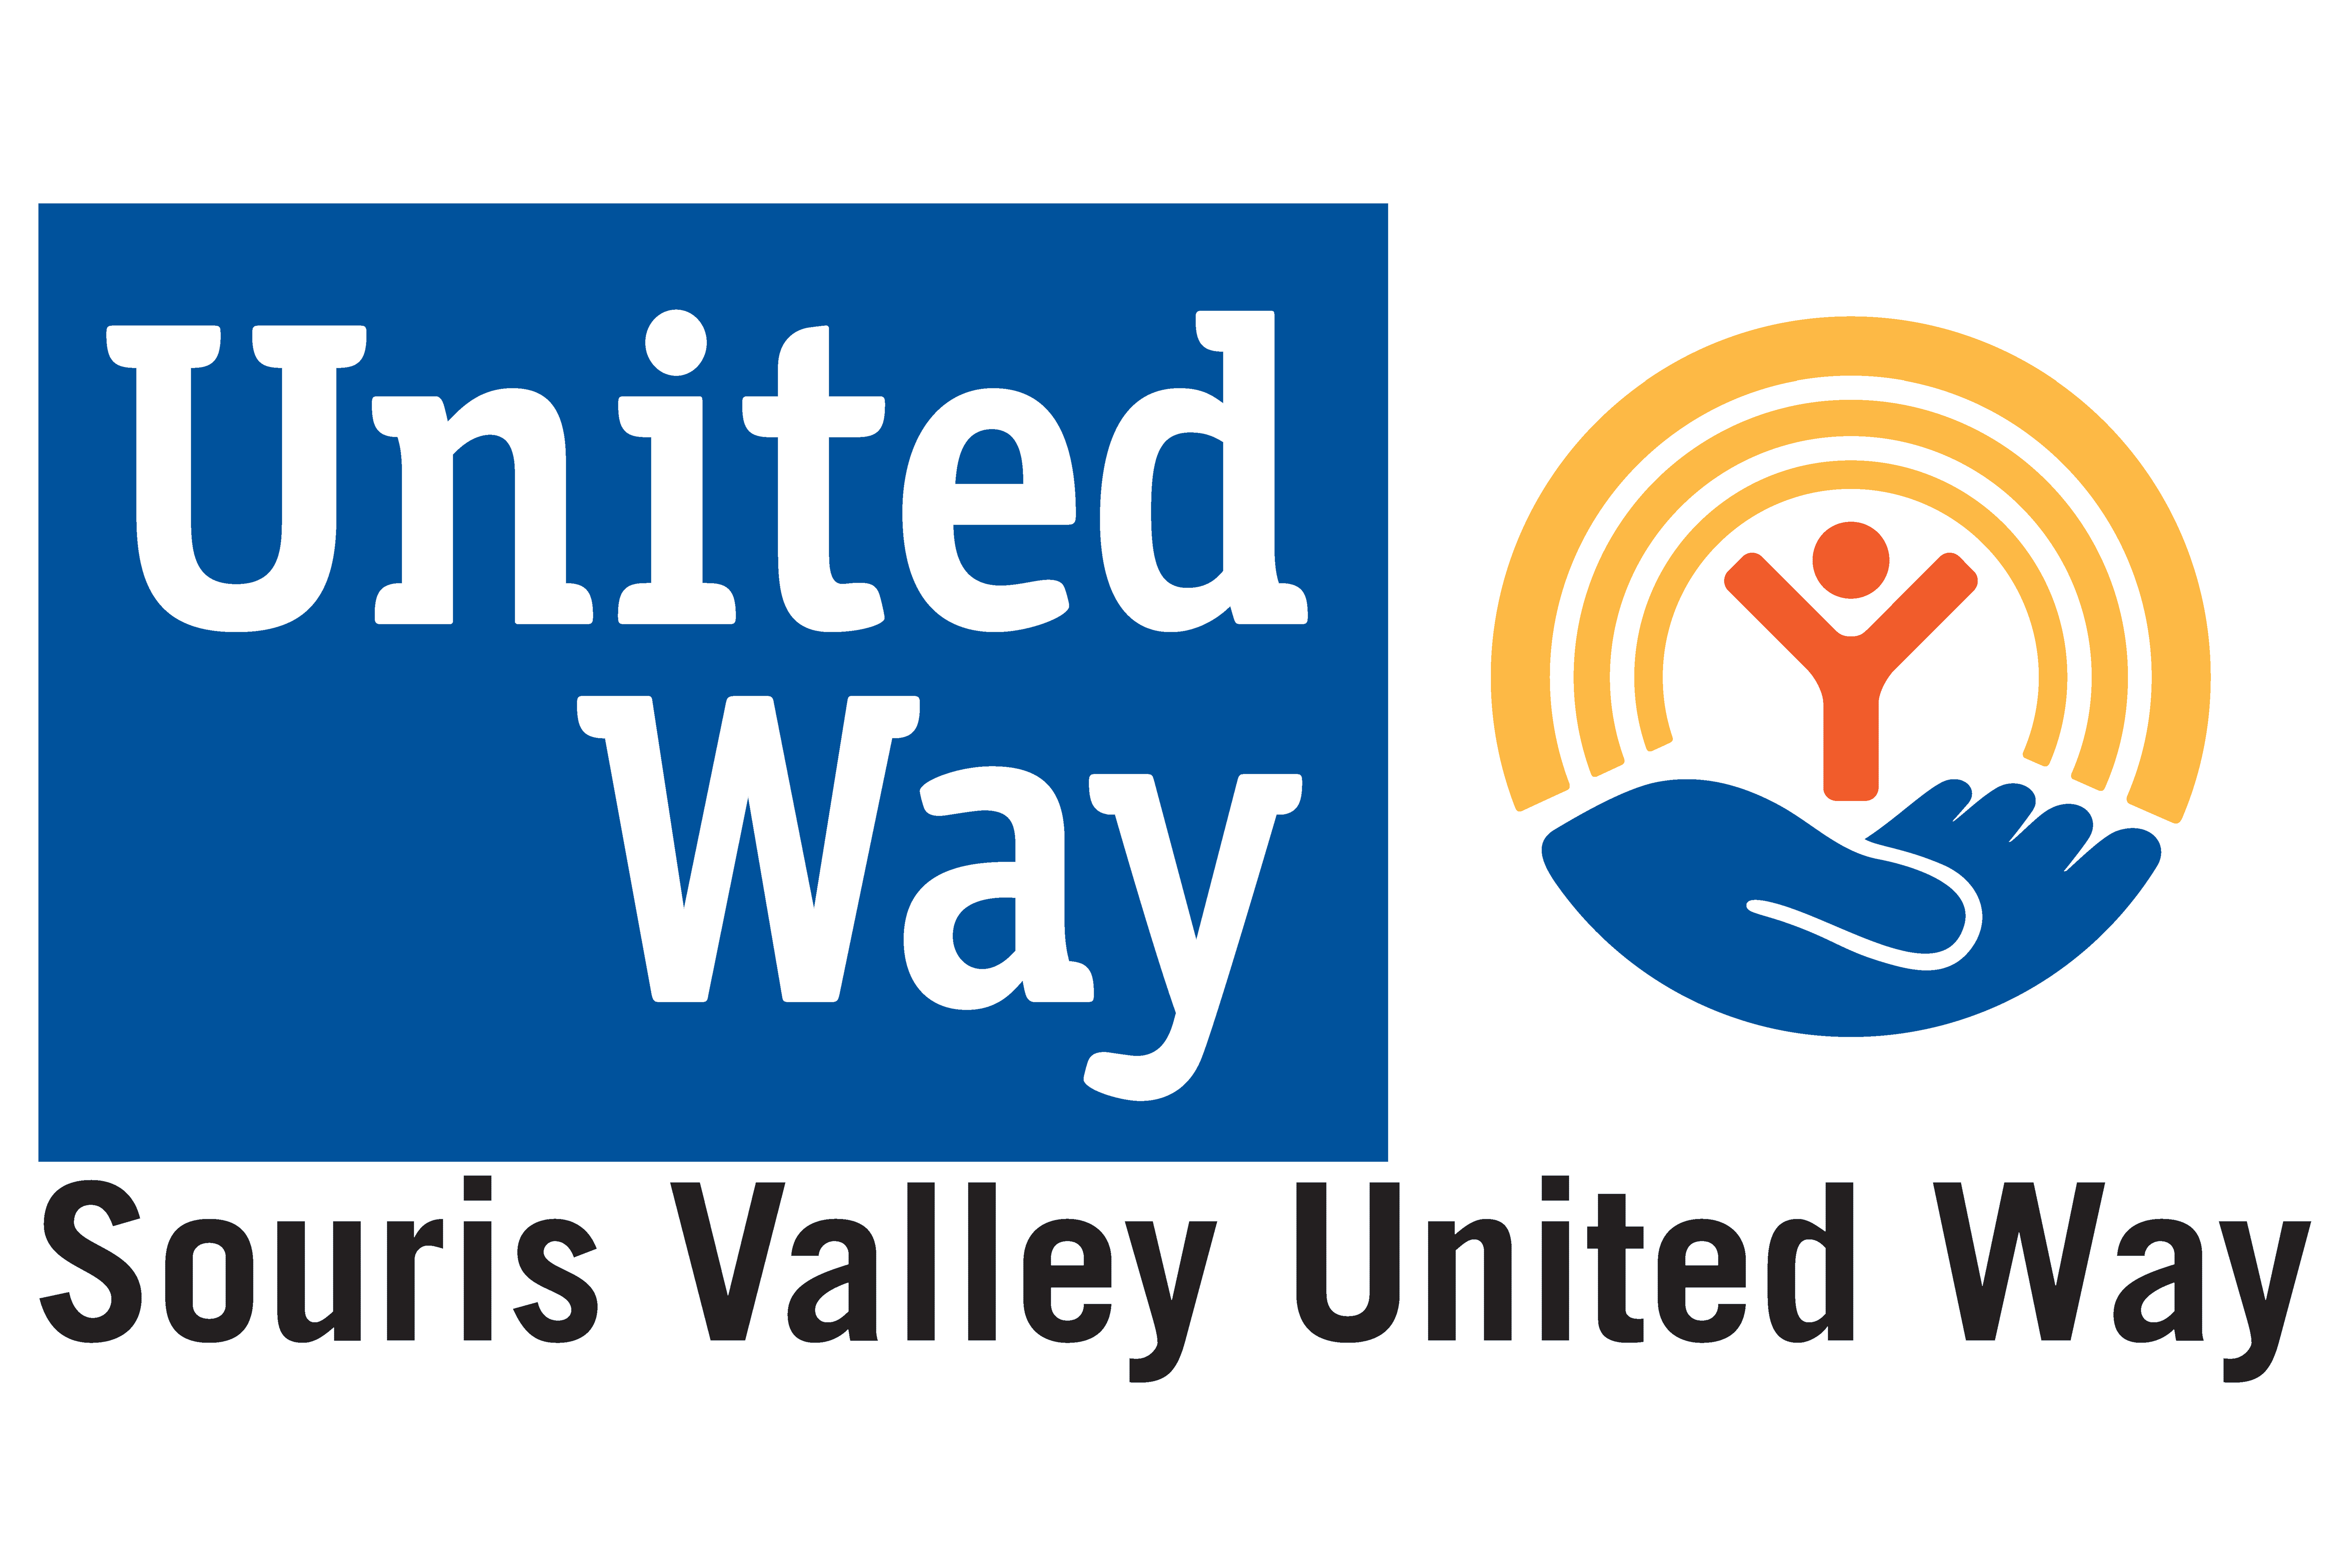 Souris Valley United Way